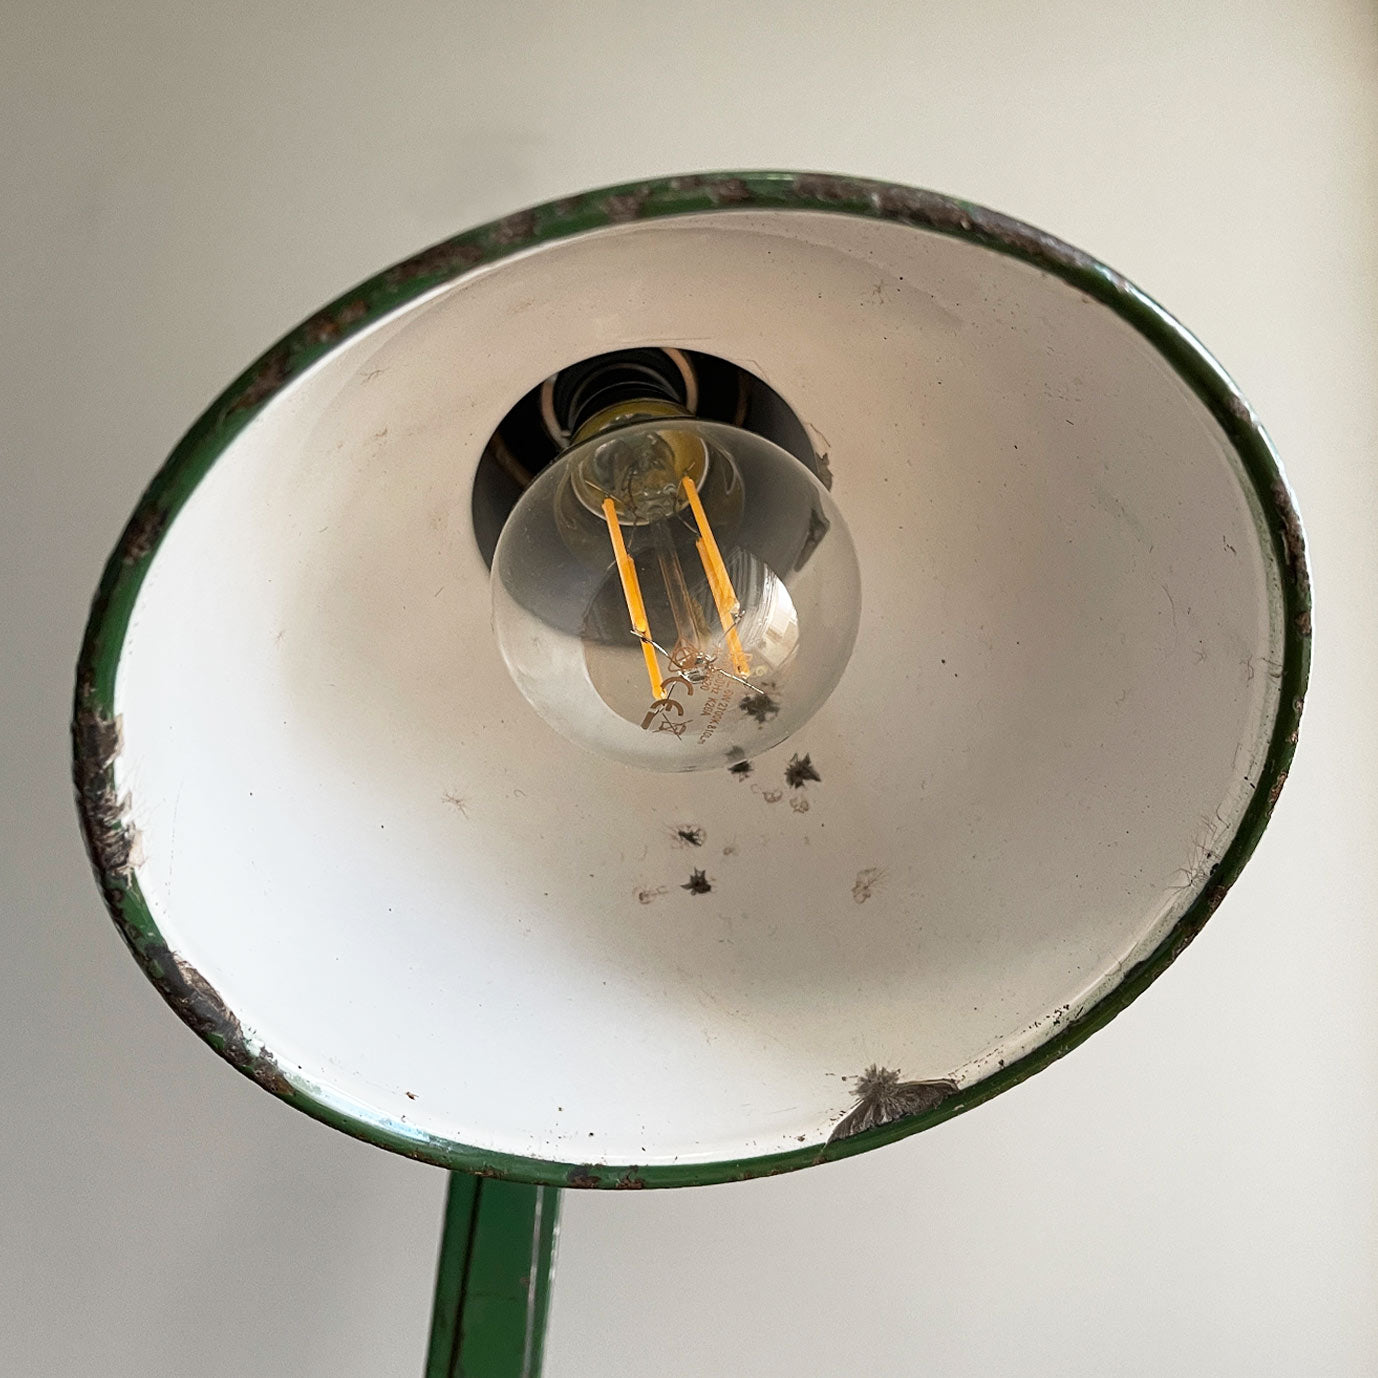 An Industrial Work Lamp